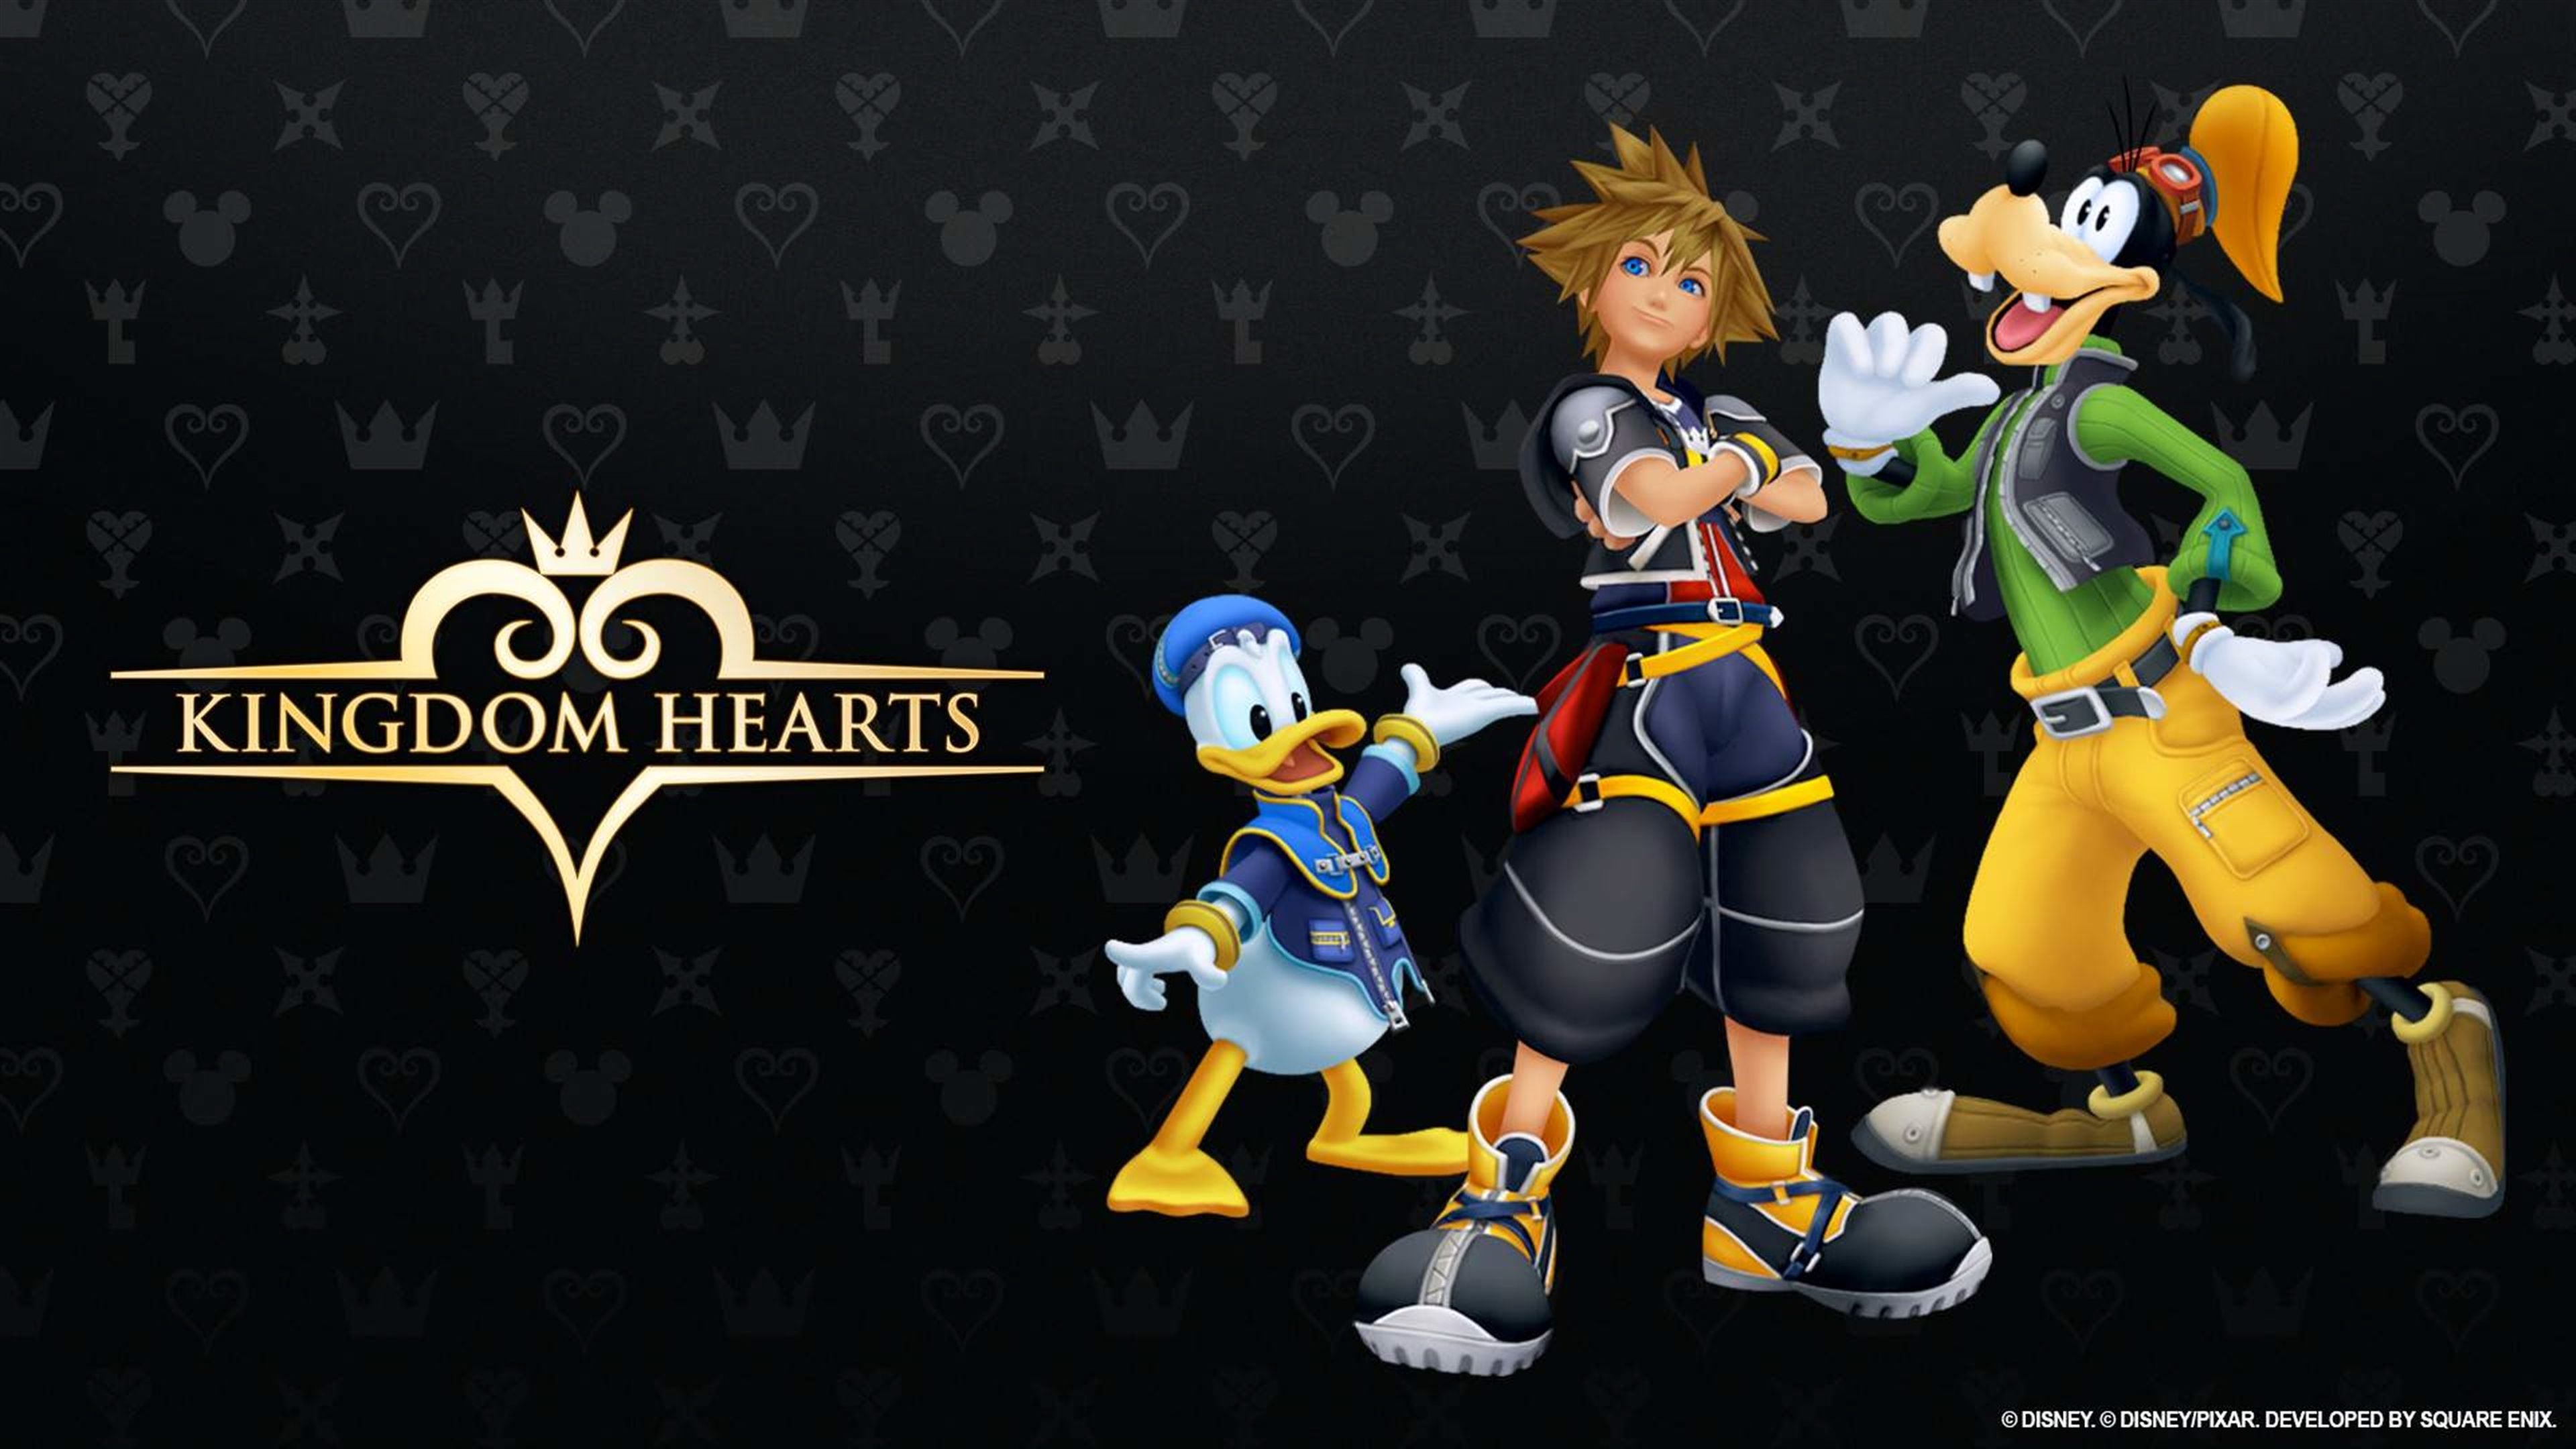 LA saga Kingdom Hearts llega a Steam